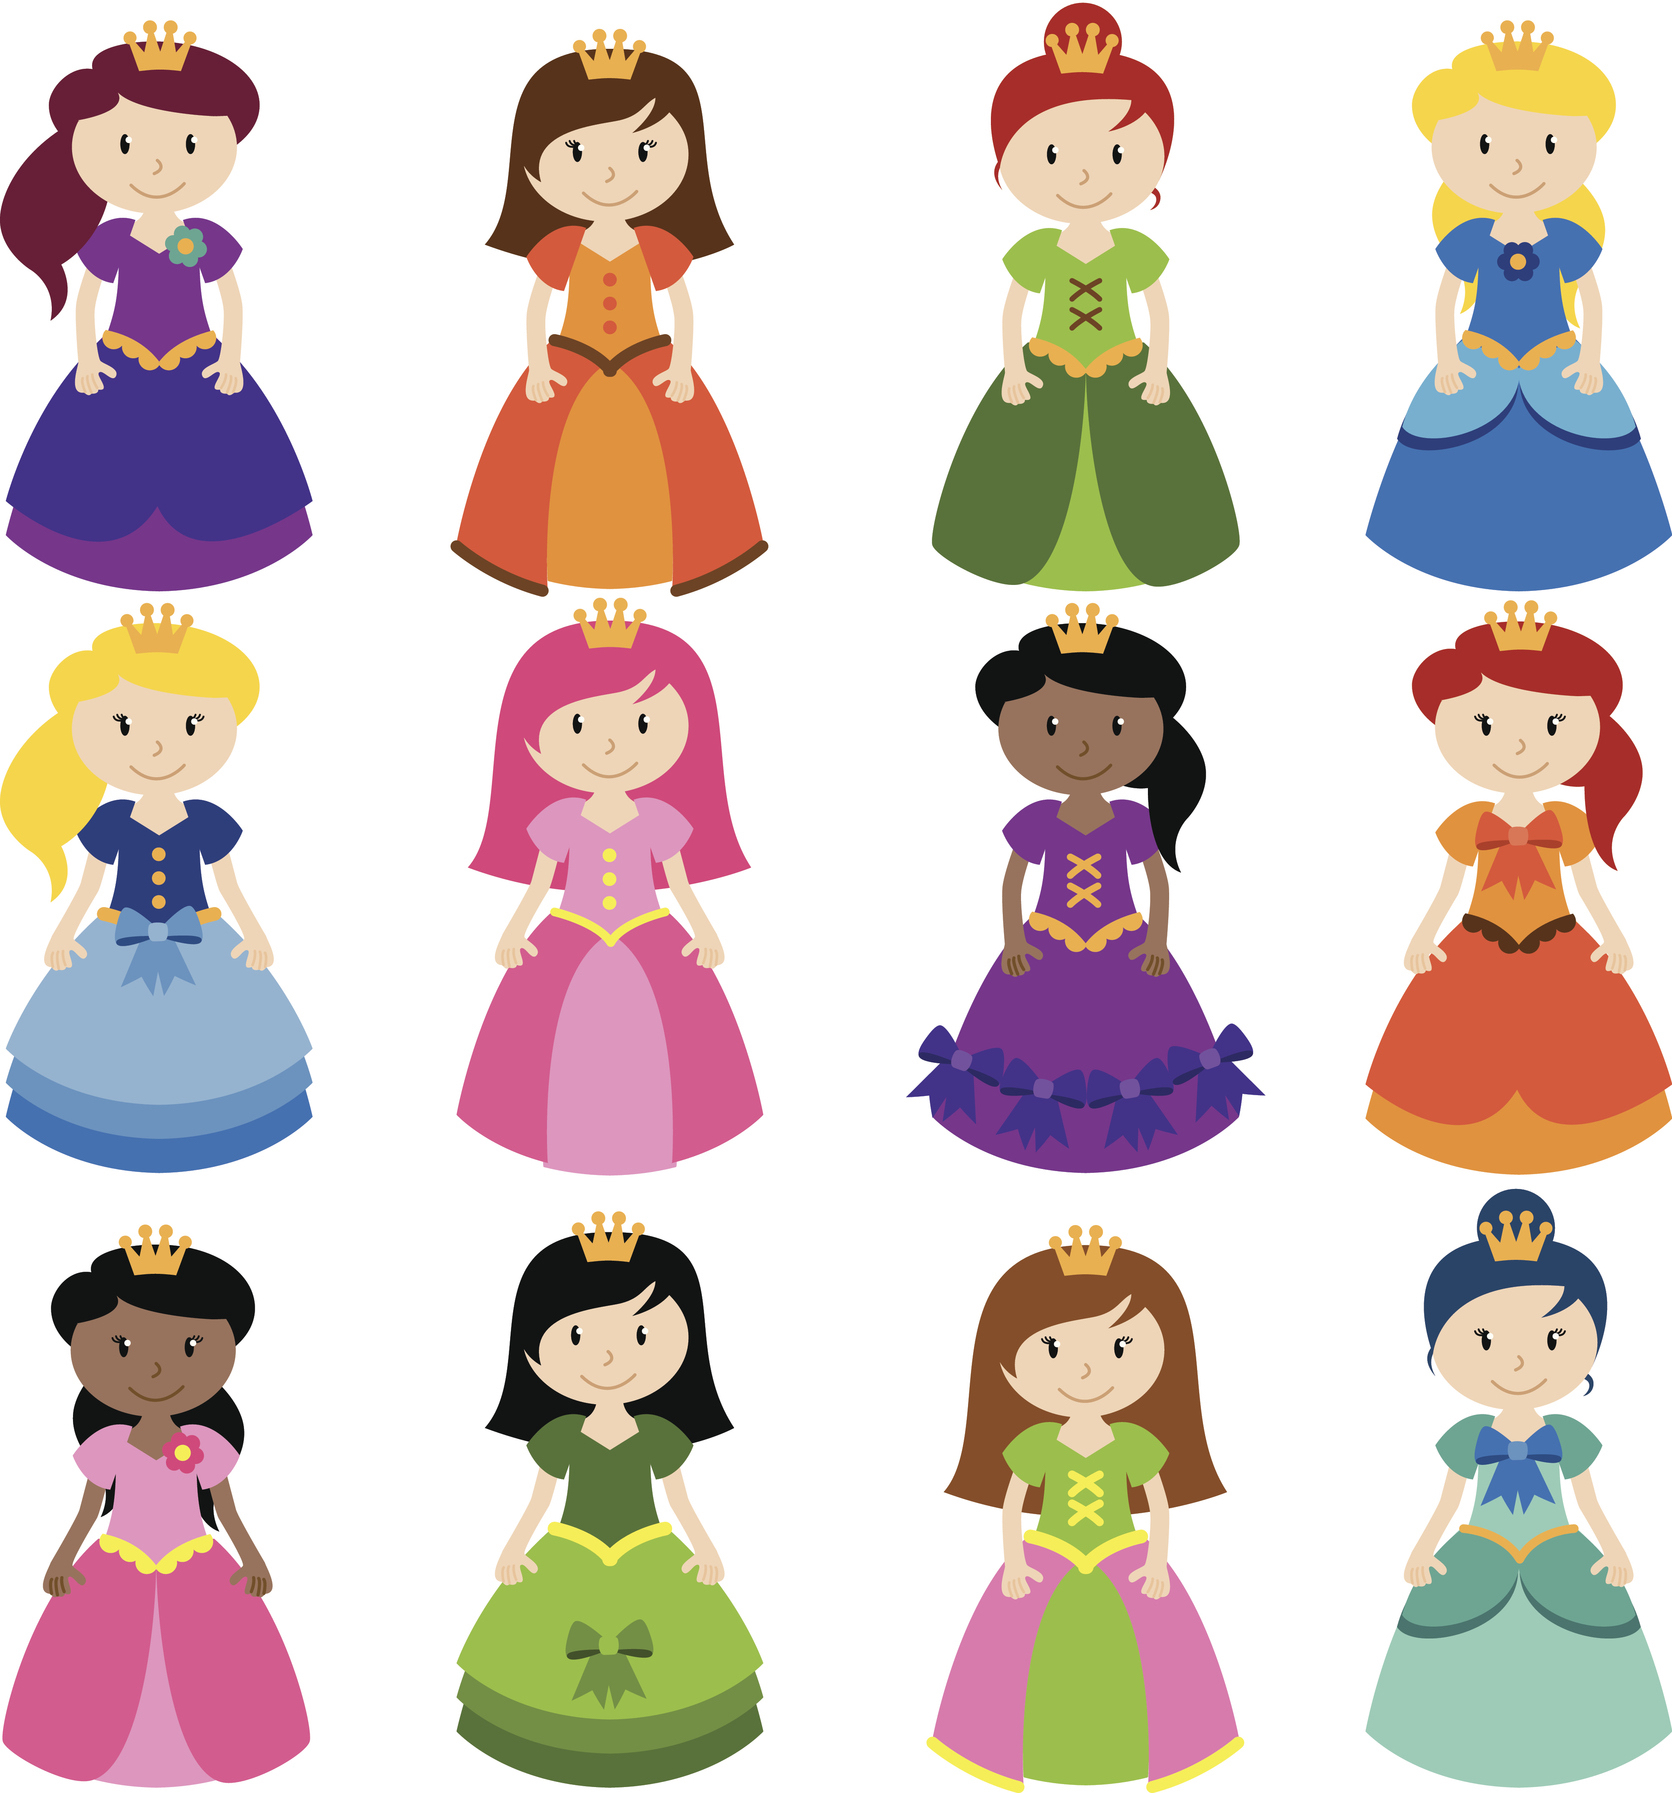 Disney Princesses: Not Brave Enough - BYU News